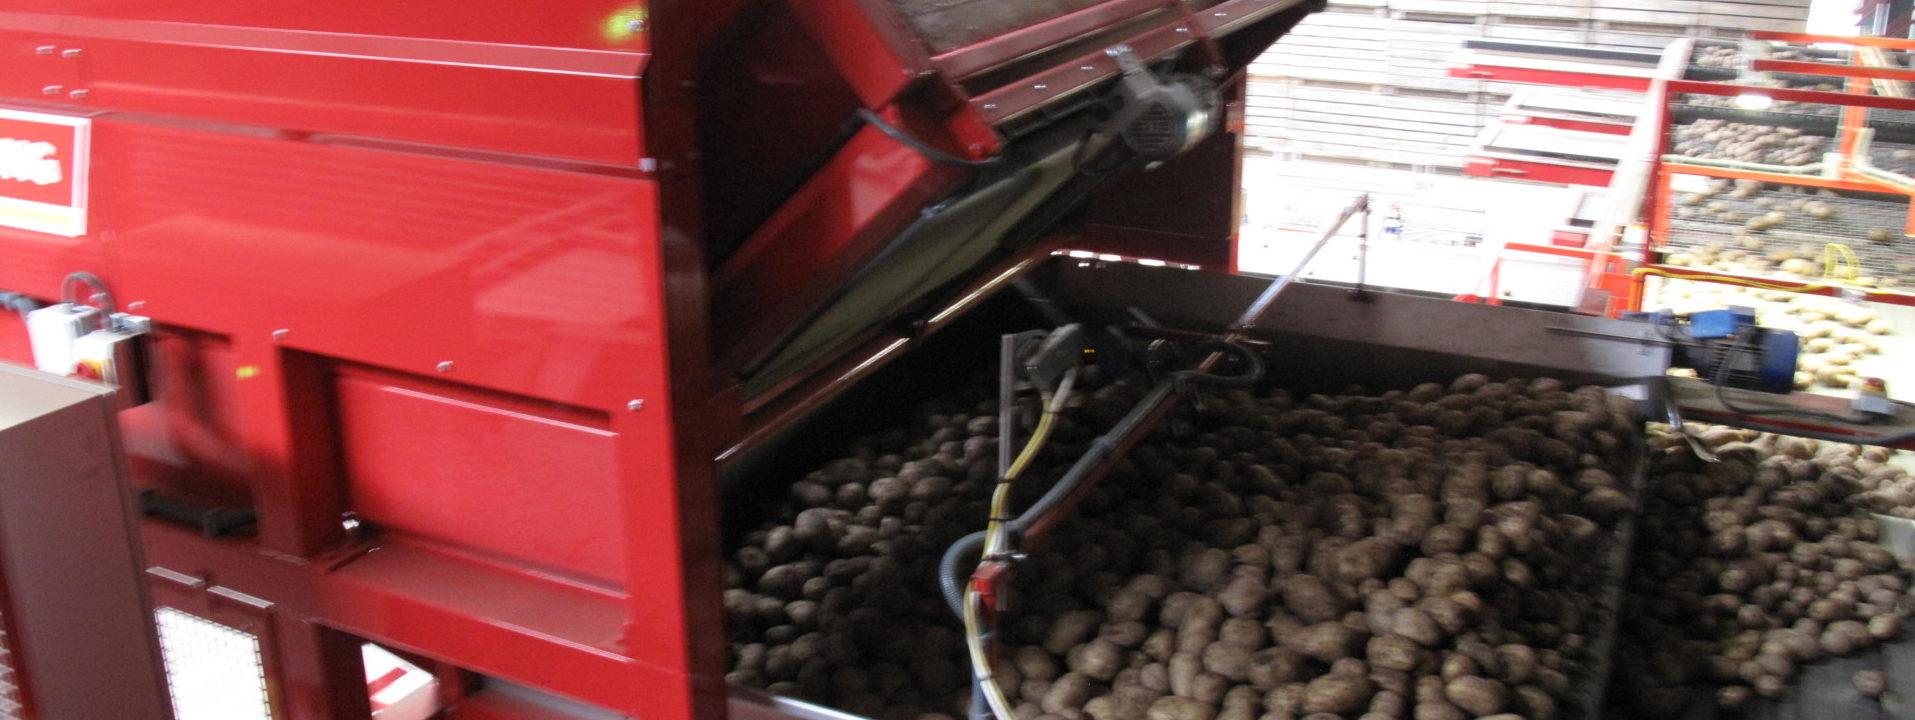 tong-potato-and-vegetable-box-tipper-machine